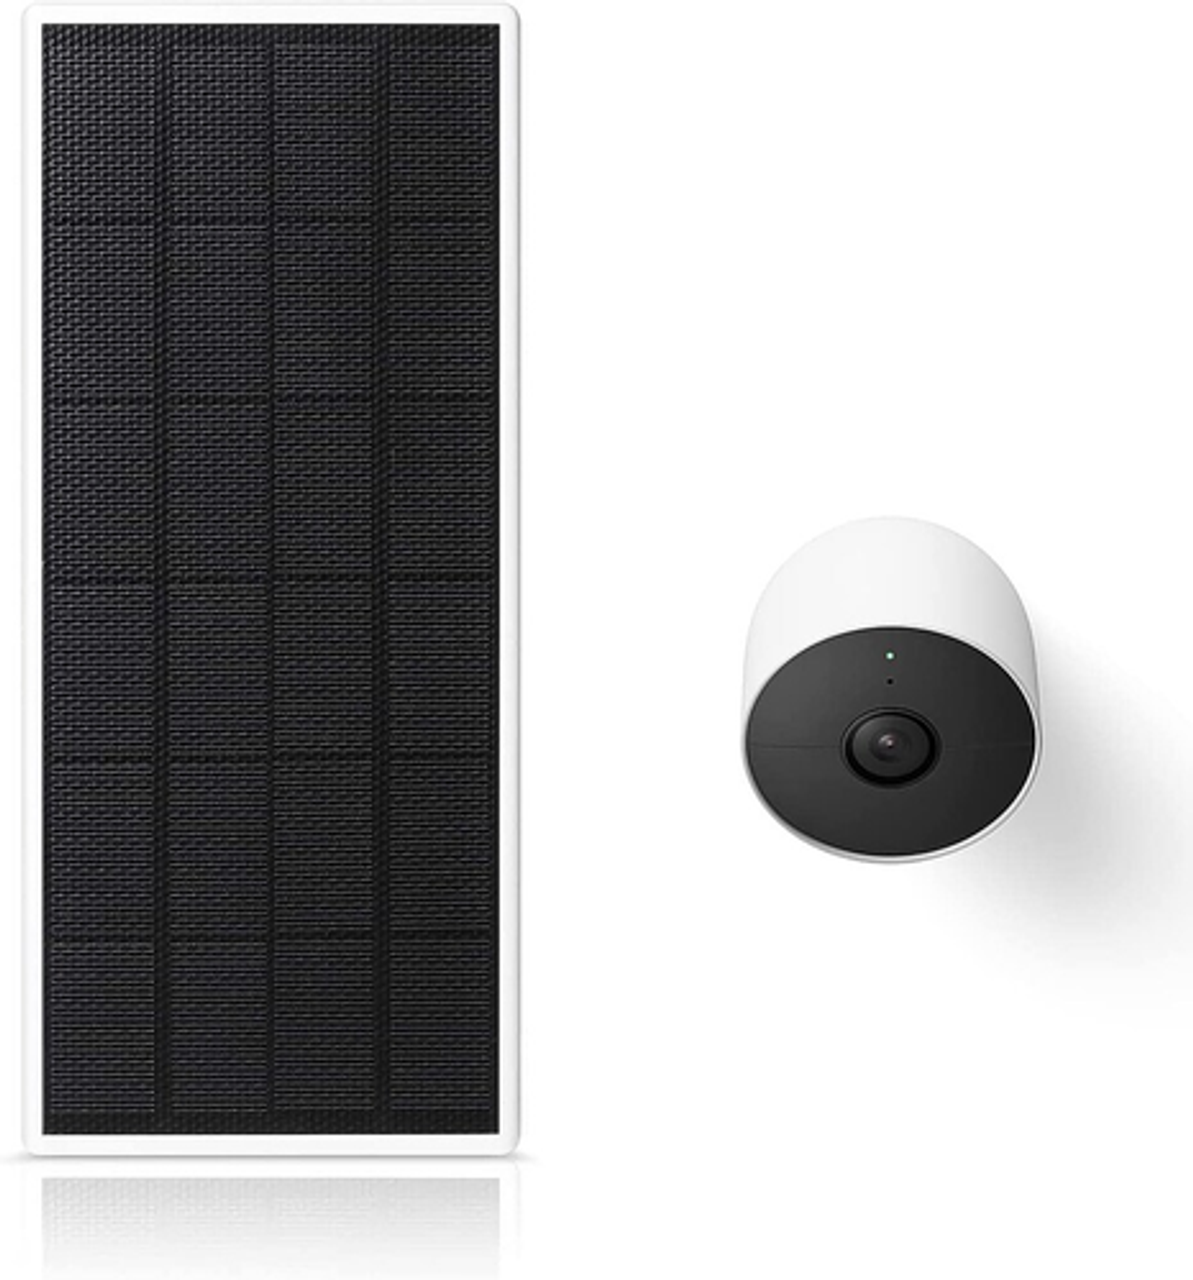 Wasserstein - Solar Panel for Google Nest Cam Outdoor or Indoor, Battery - 2.5W Solar Power - Made for Google Nest (3-Pack) - White